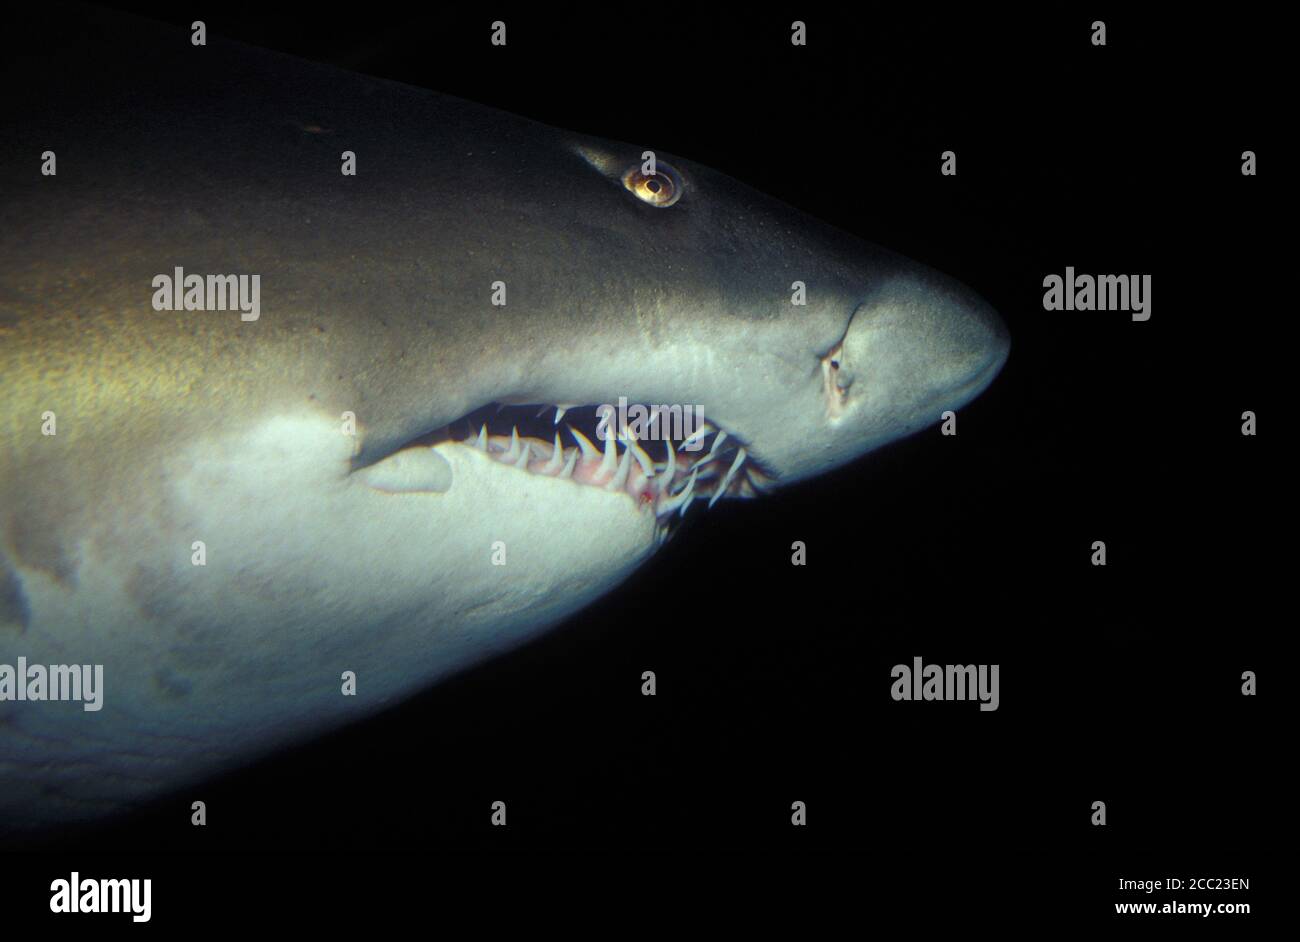 Grigio squalo nutrice - sandtiger-shark Foto stock - Alamy